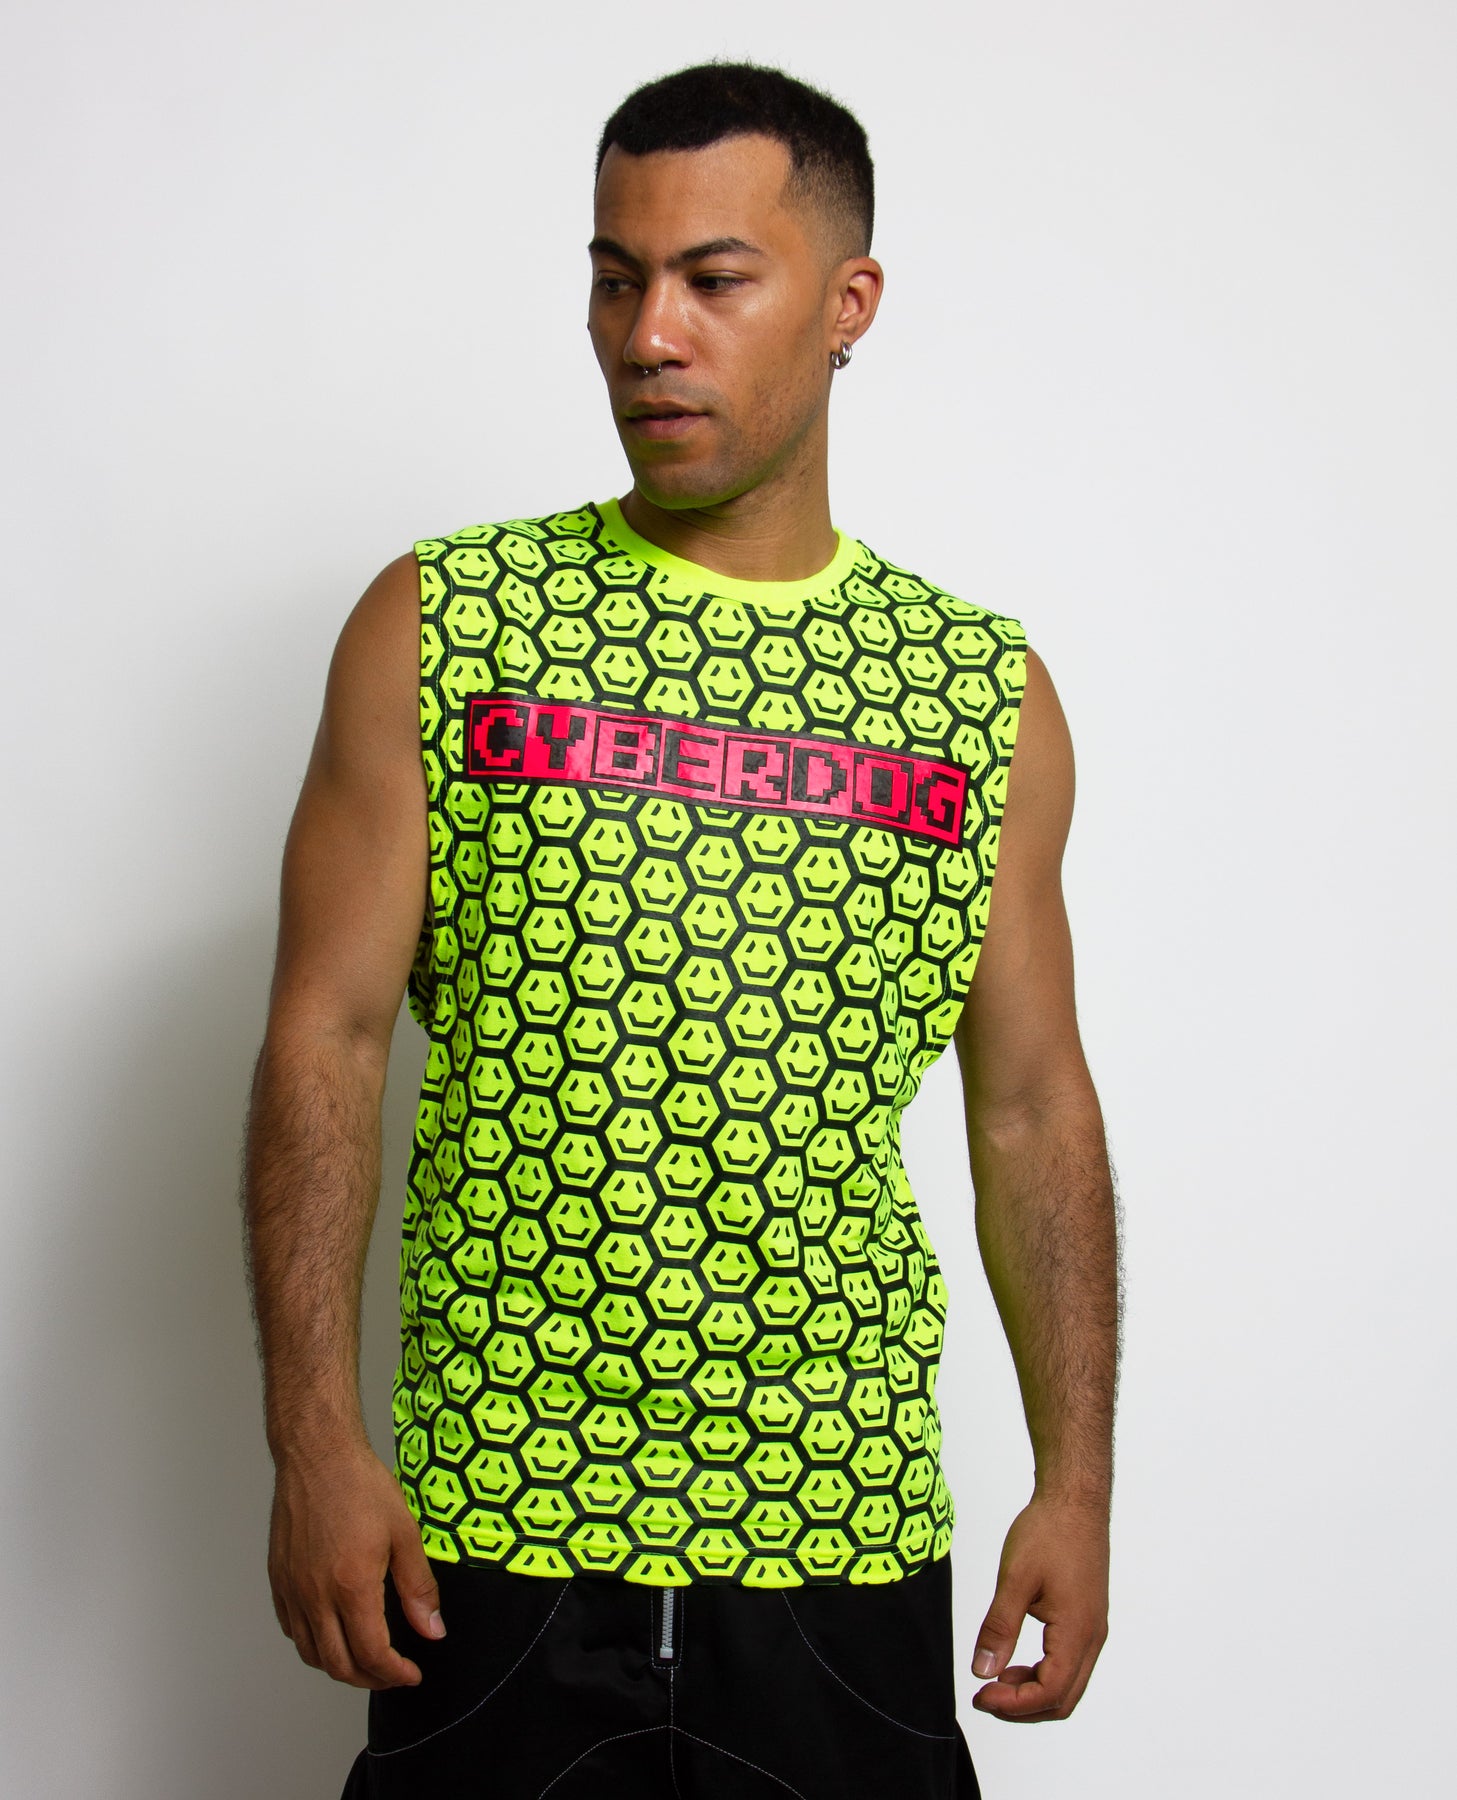 RAVE VEST HEX SMILEY | Cyberdog London by Cyberdog - Rave clothing ...